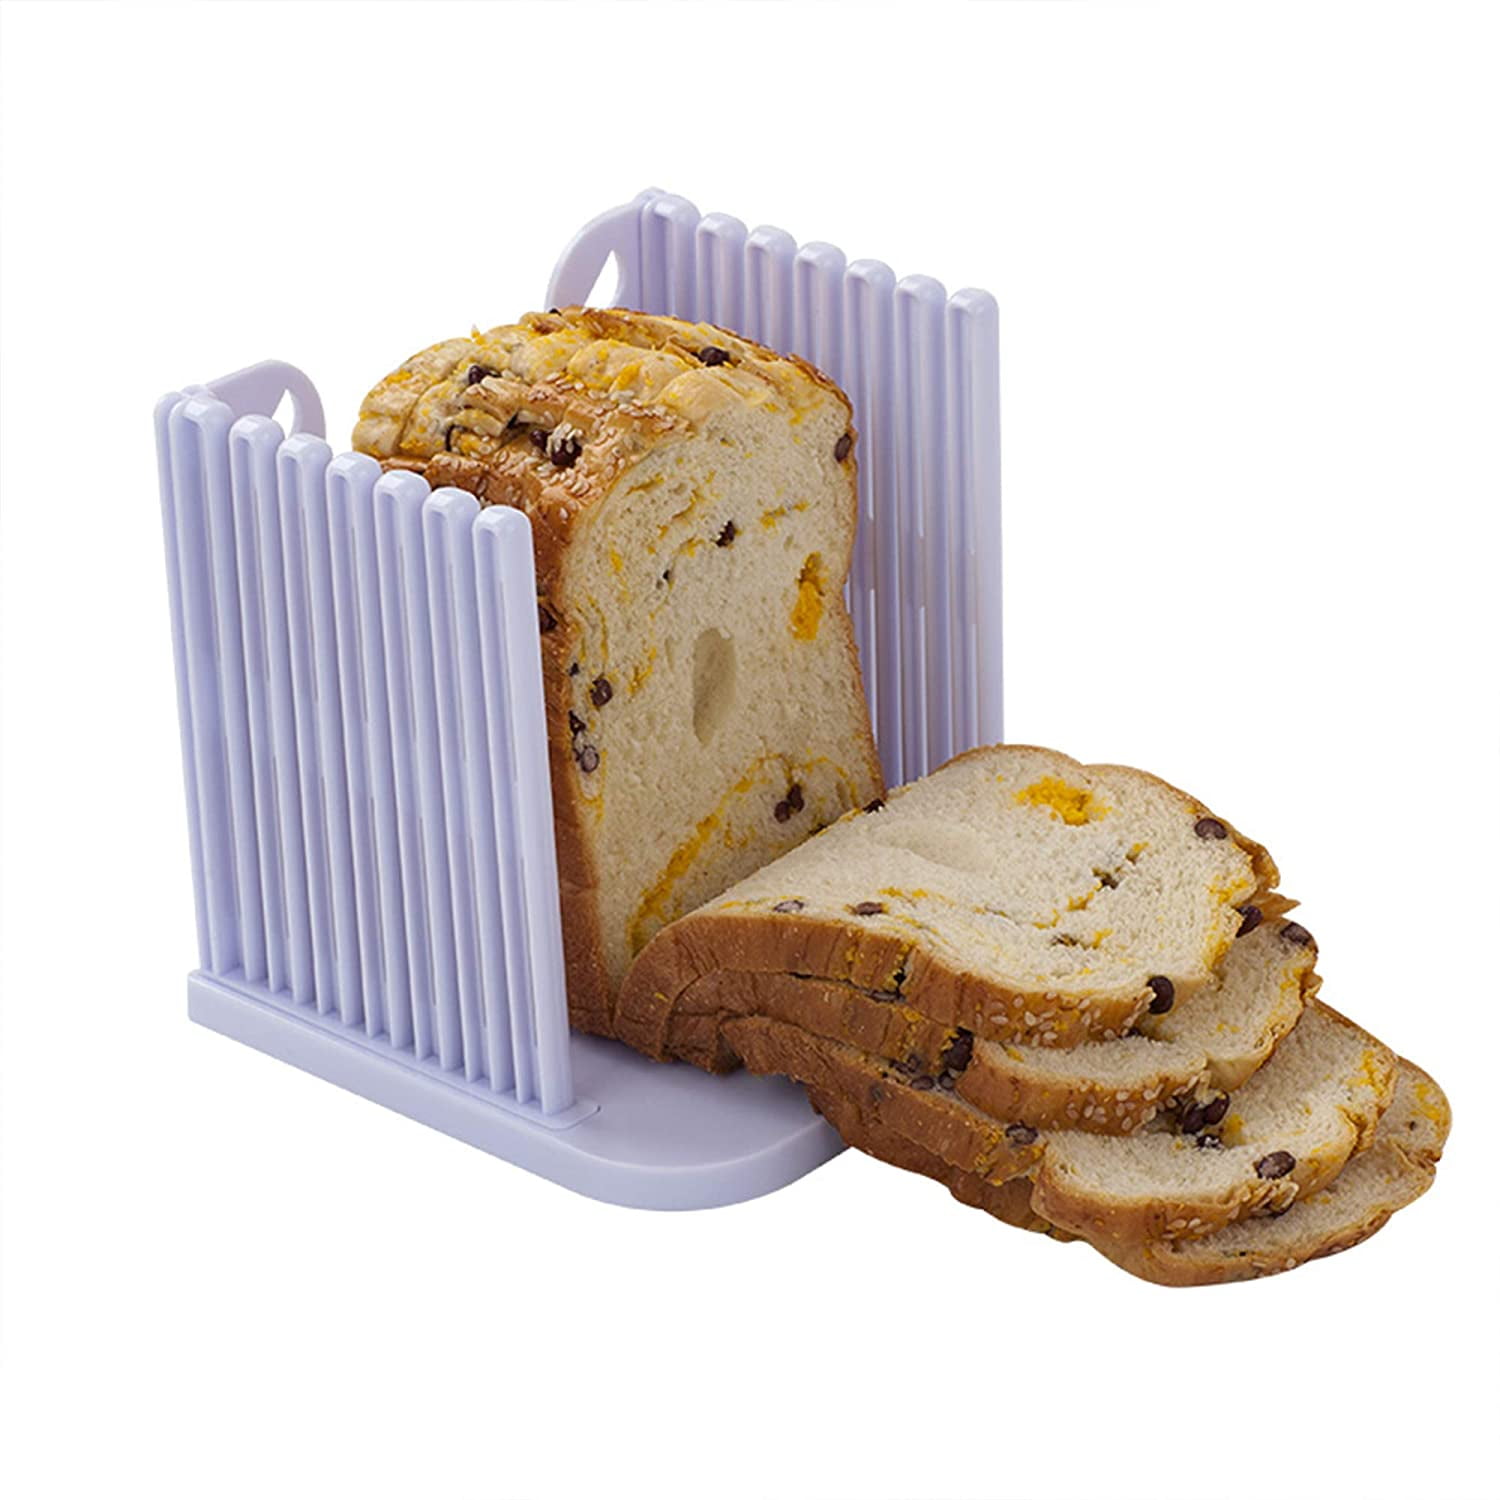  GLMFAN Bread Slicer for Homemade Bread, Foldable Bread